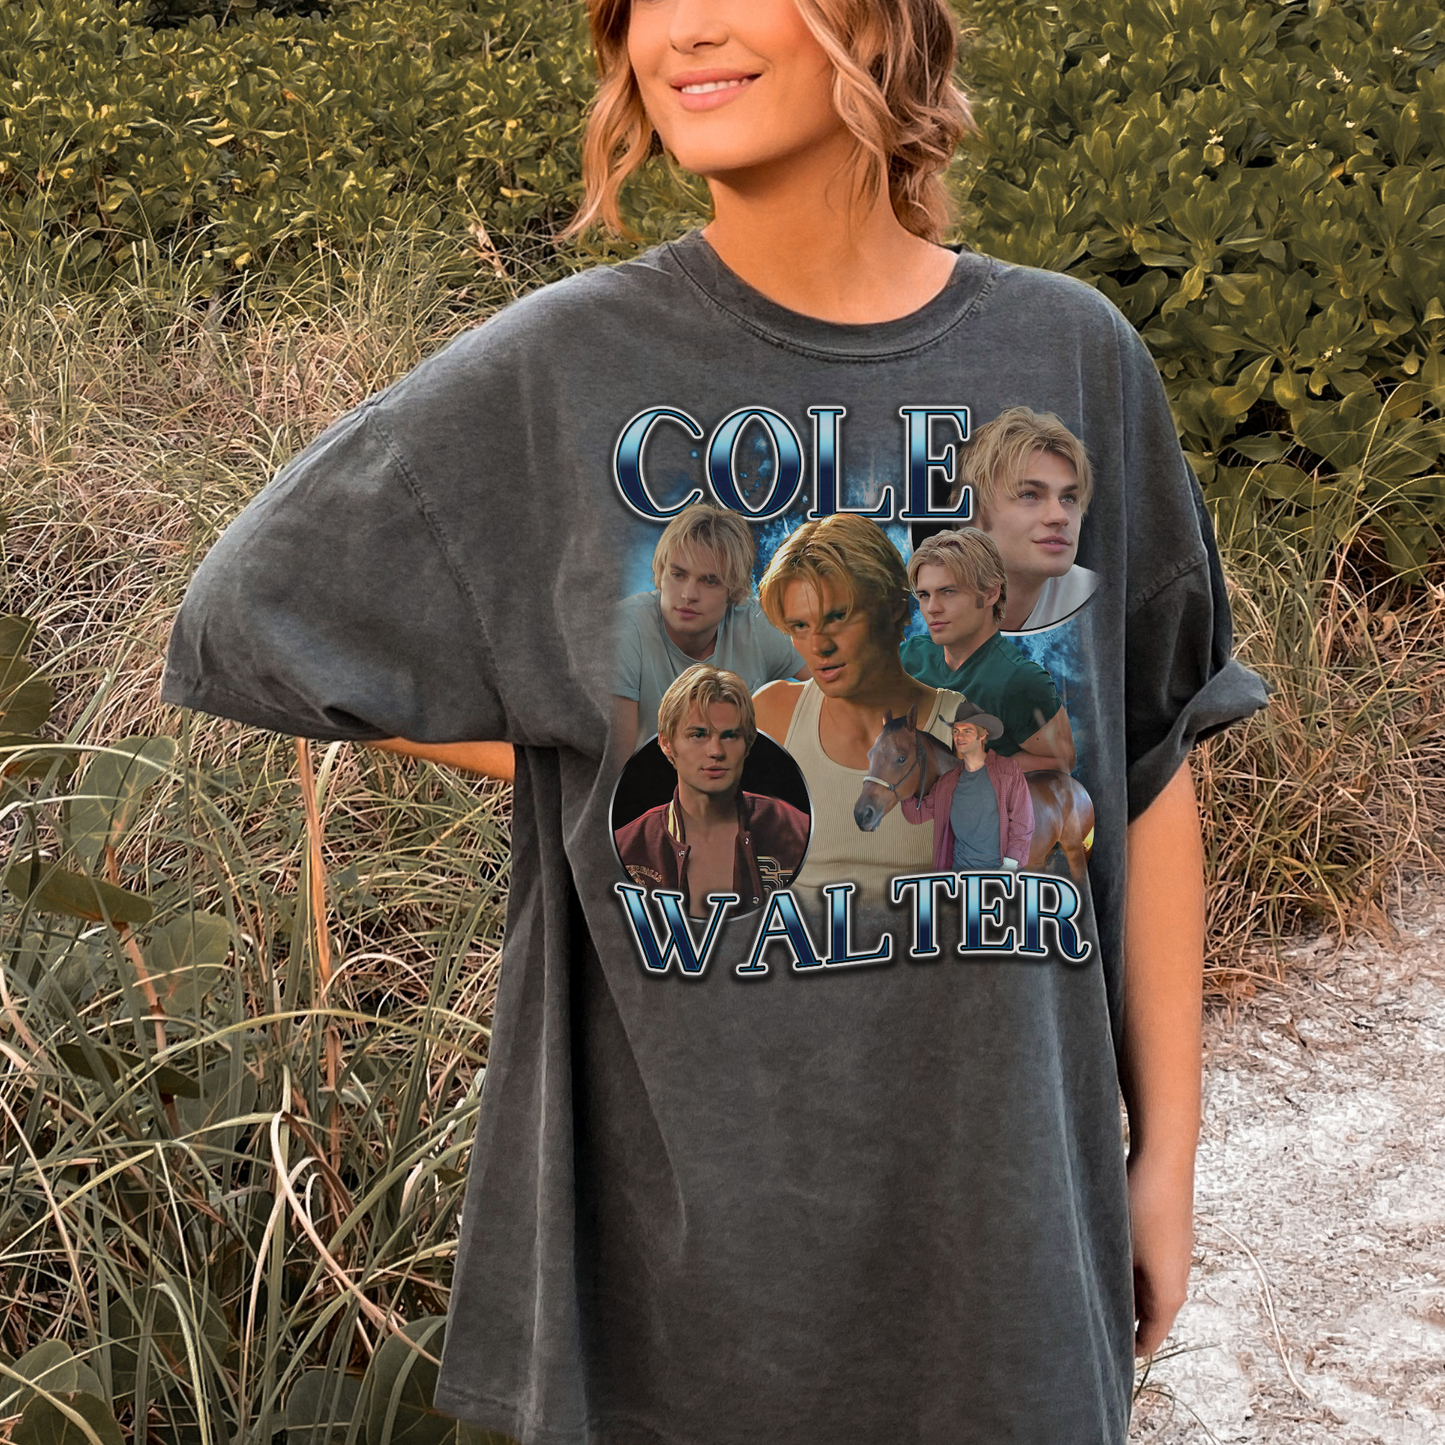 Cole Walter Shirt